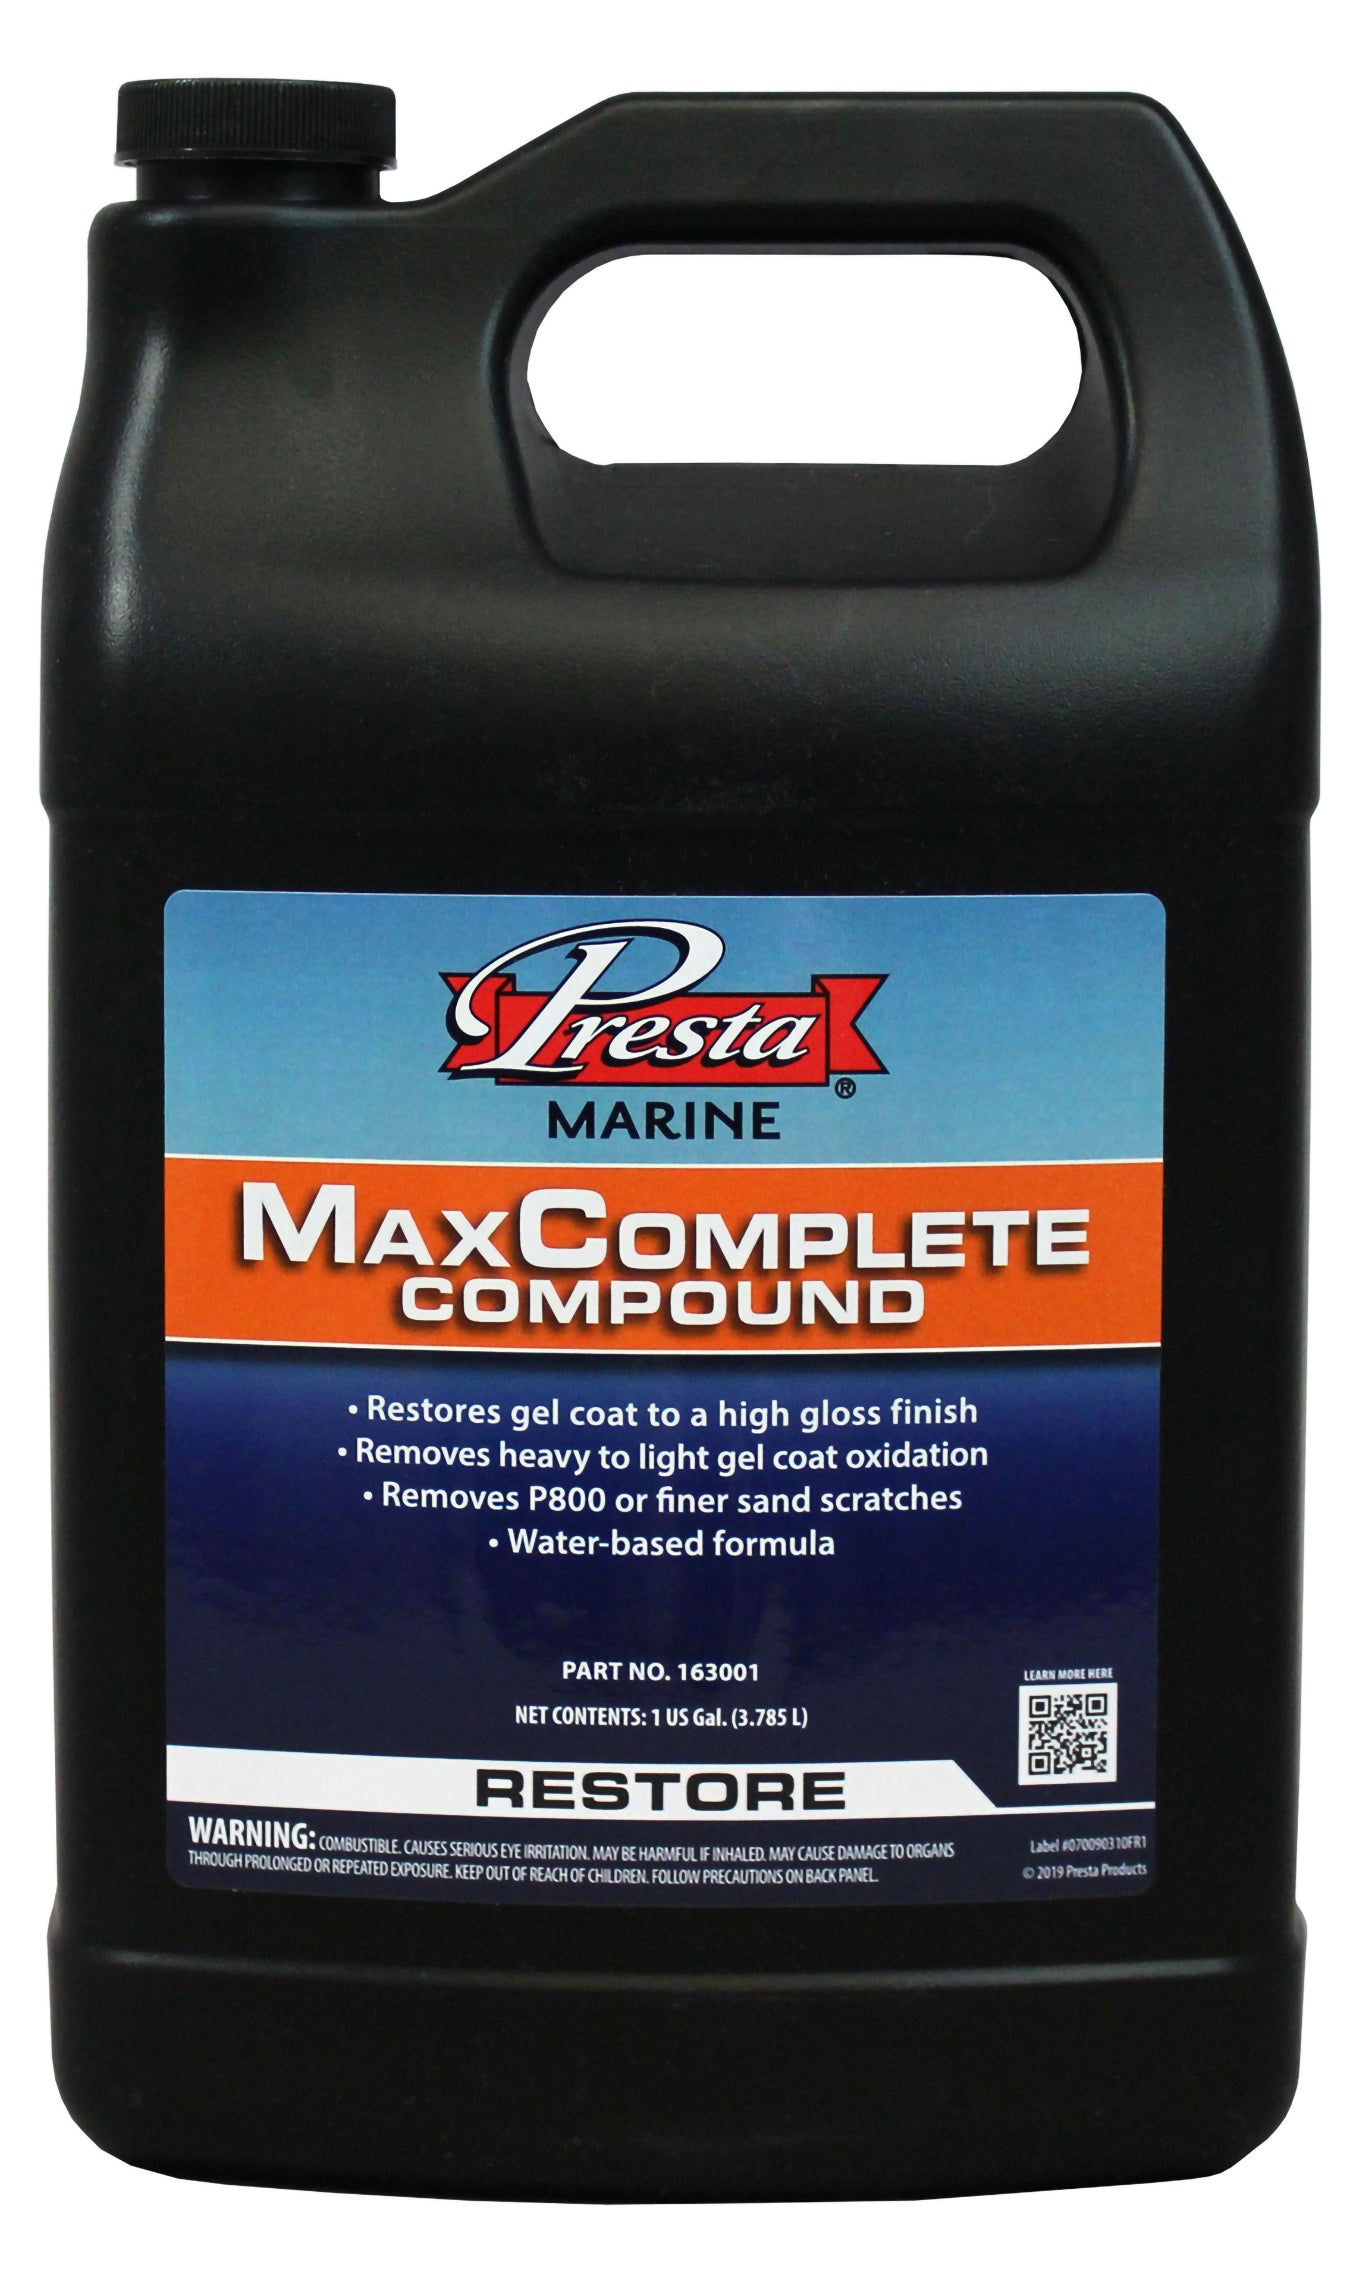 MaxComplete Compound – Presta Marine